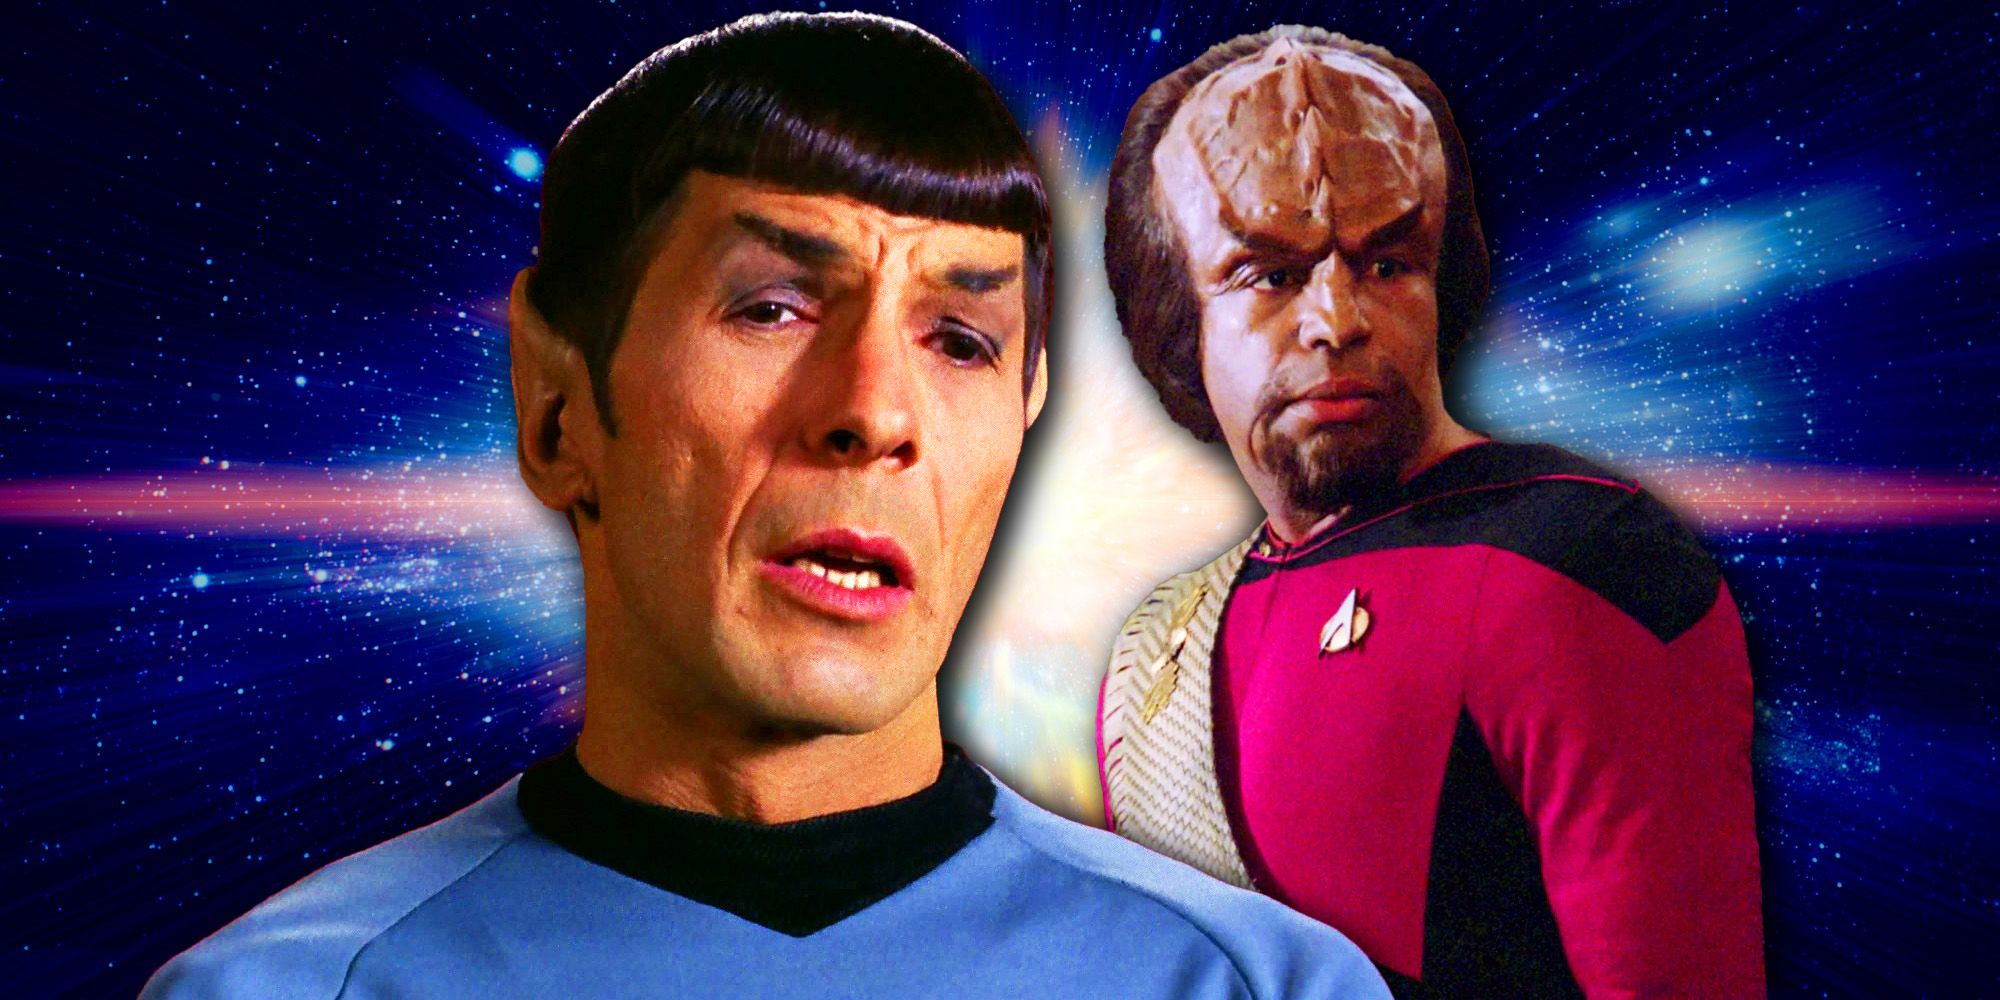 Spock in 1960s Star Trek and Worf in Star Trek- Next Generation season 1